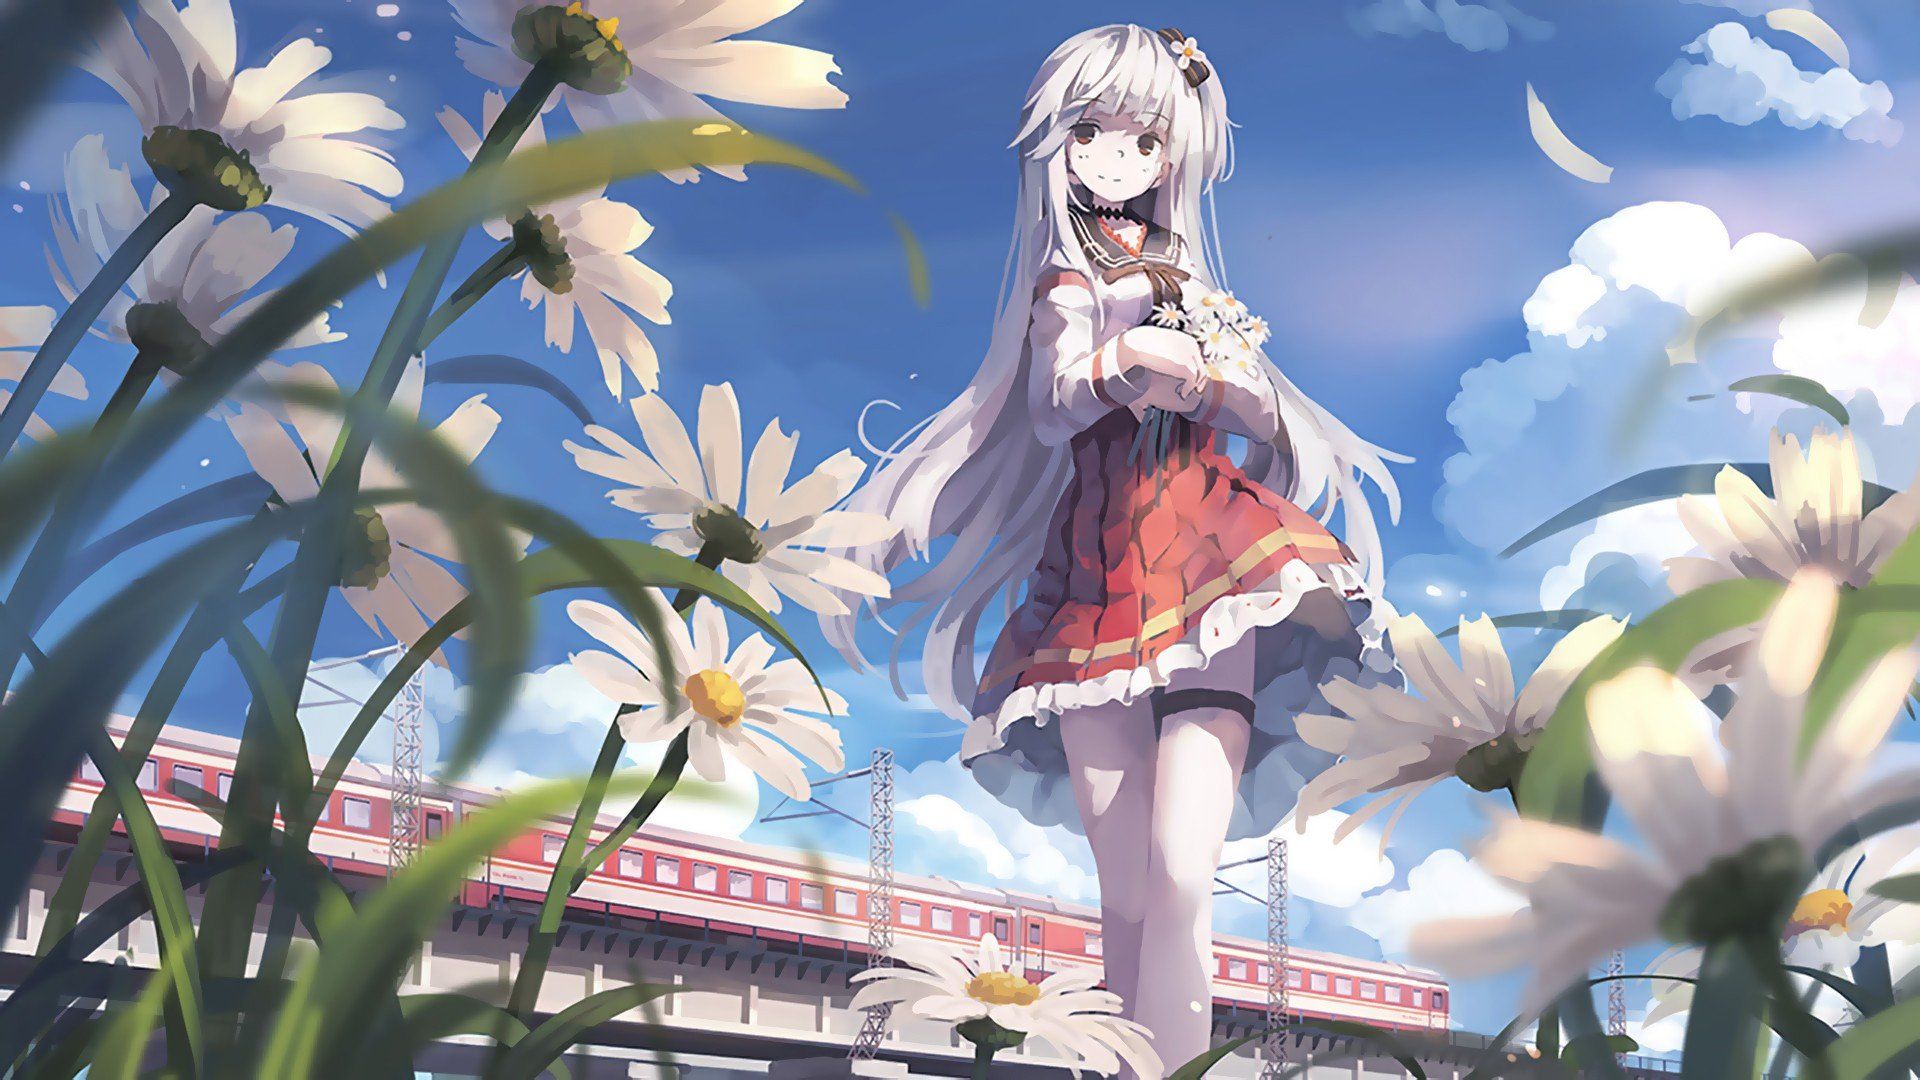 white hair, Long hair, Anime, Landscape, Blossoms, Train, Anime